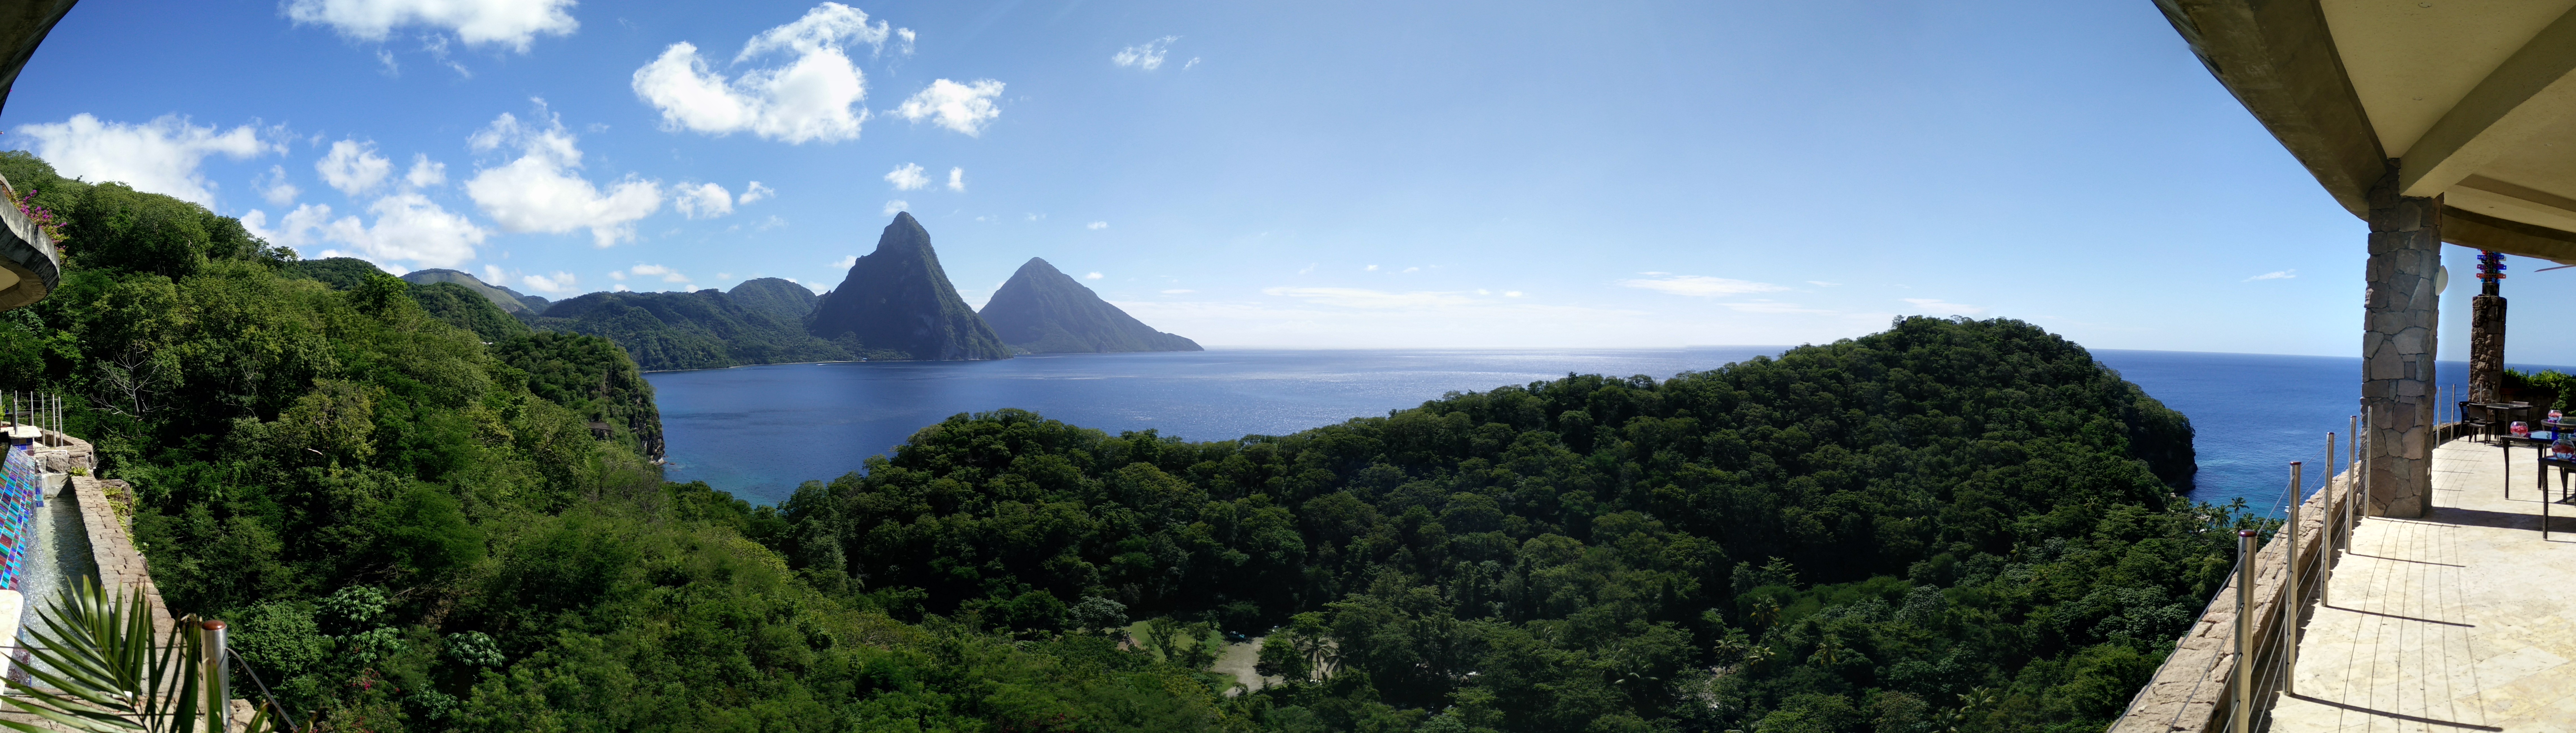 St. Lucia honeymoon ideas - Jade Mountain panoramic shot